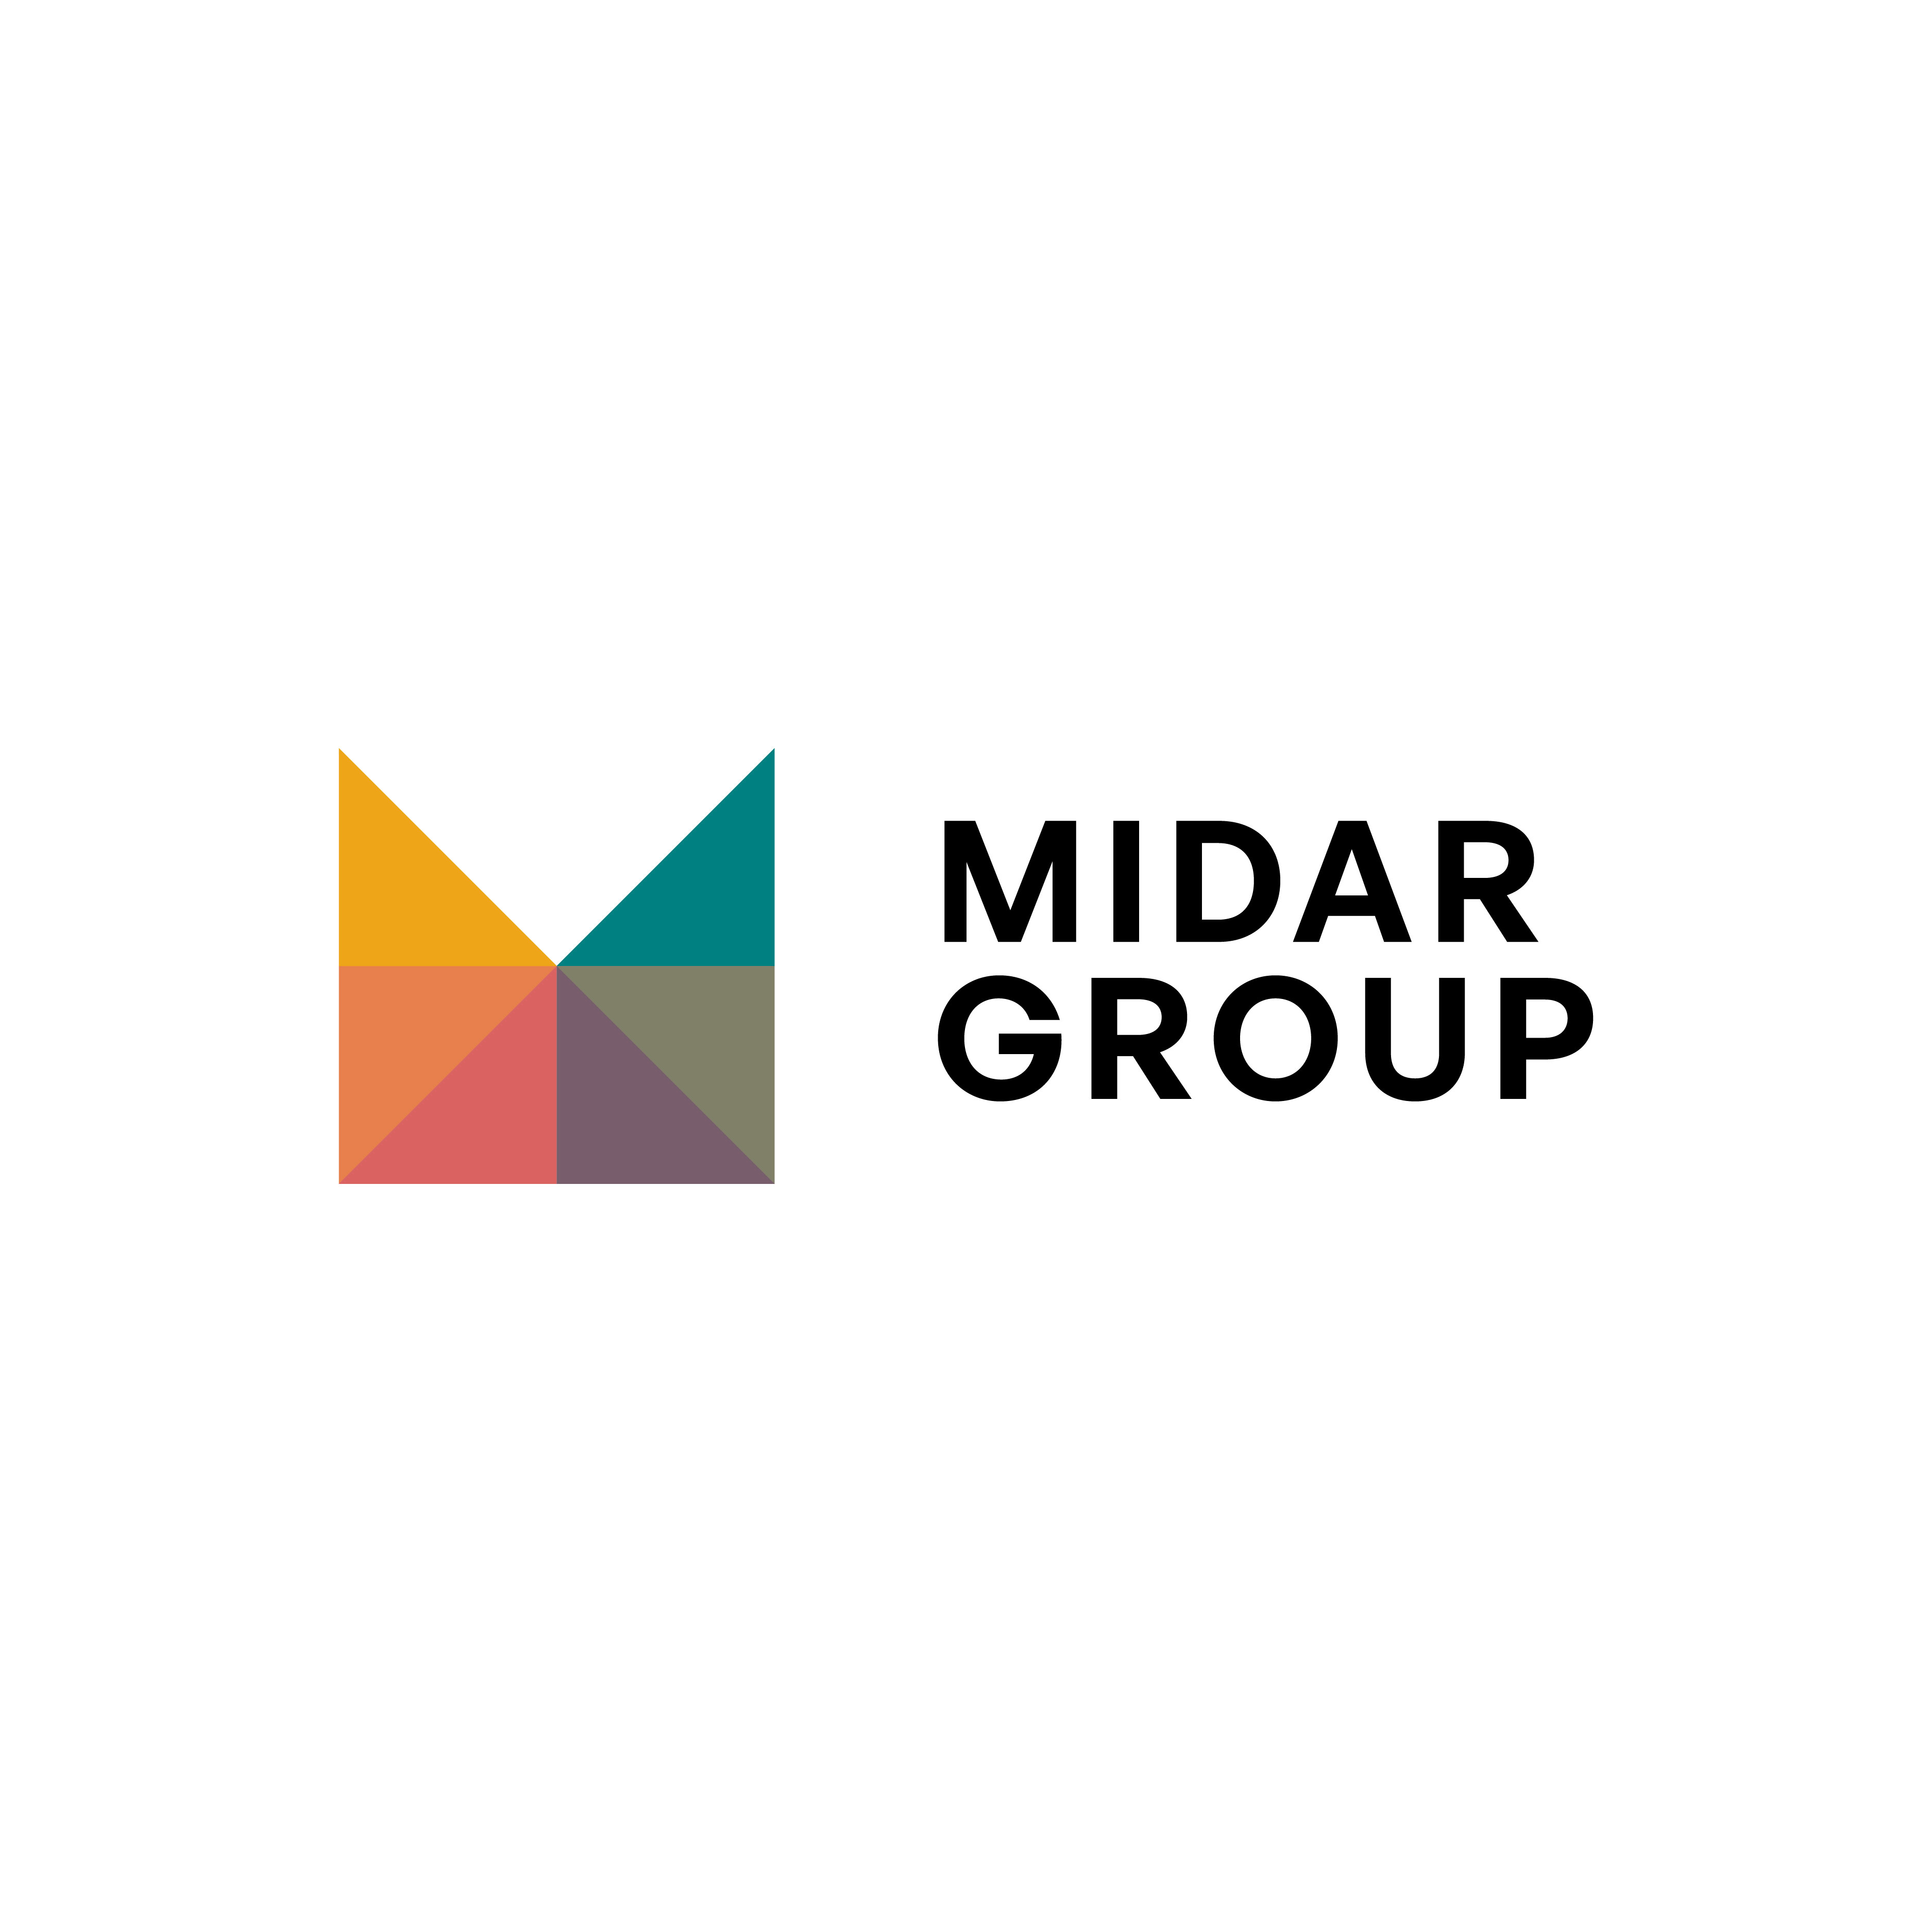 Midar logo design by logo designer Bloom Communication SRL for your inspiration and for the worlds largest logo competition